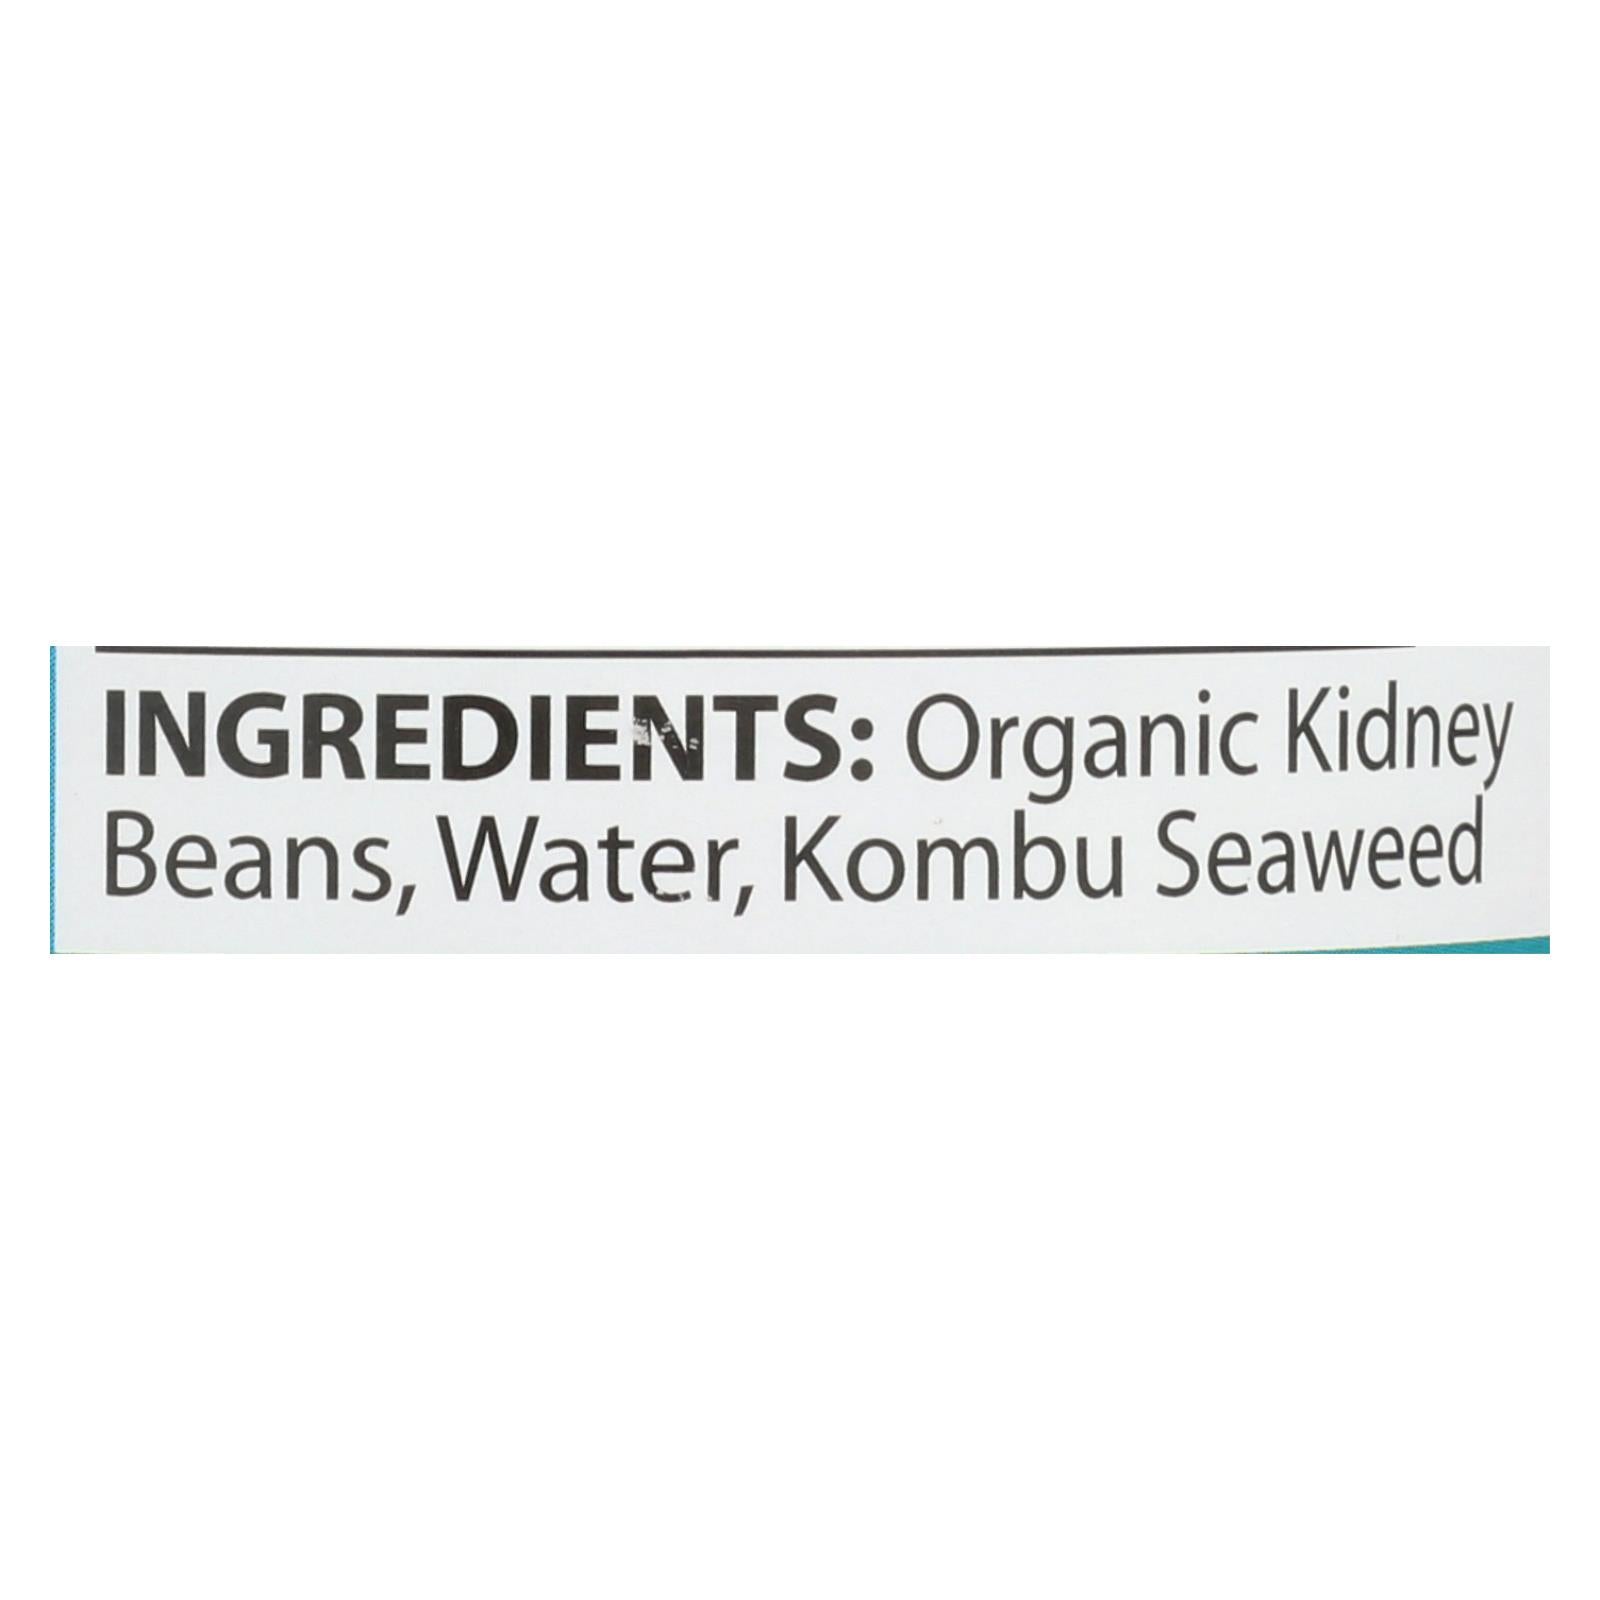 Buy Eden Foods Organic Kidney Beans - Case Of 12 - 15 Oz.  at OnlyNaturals.us